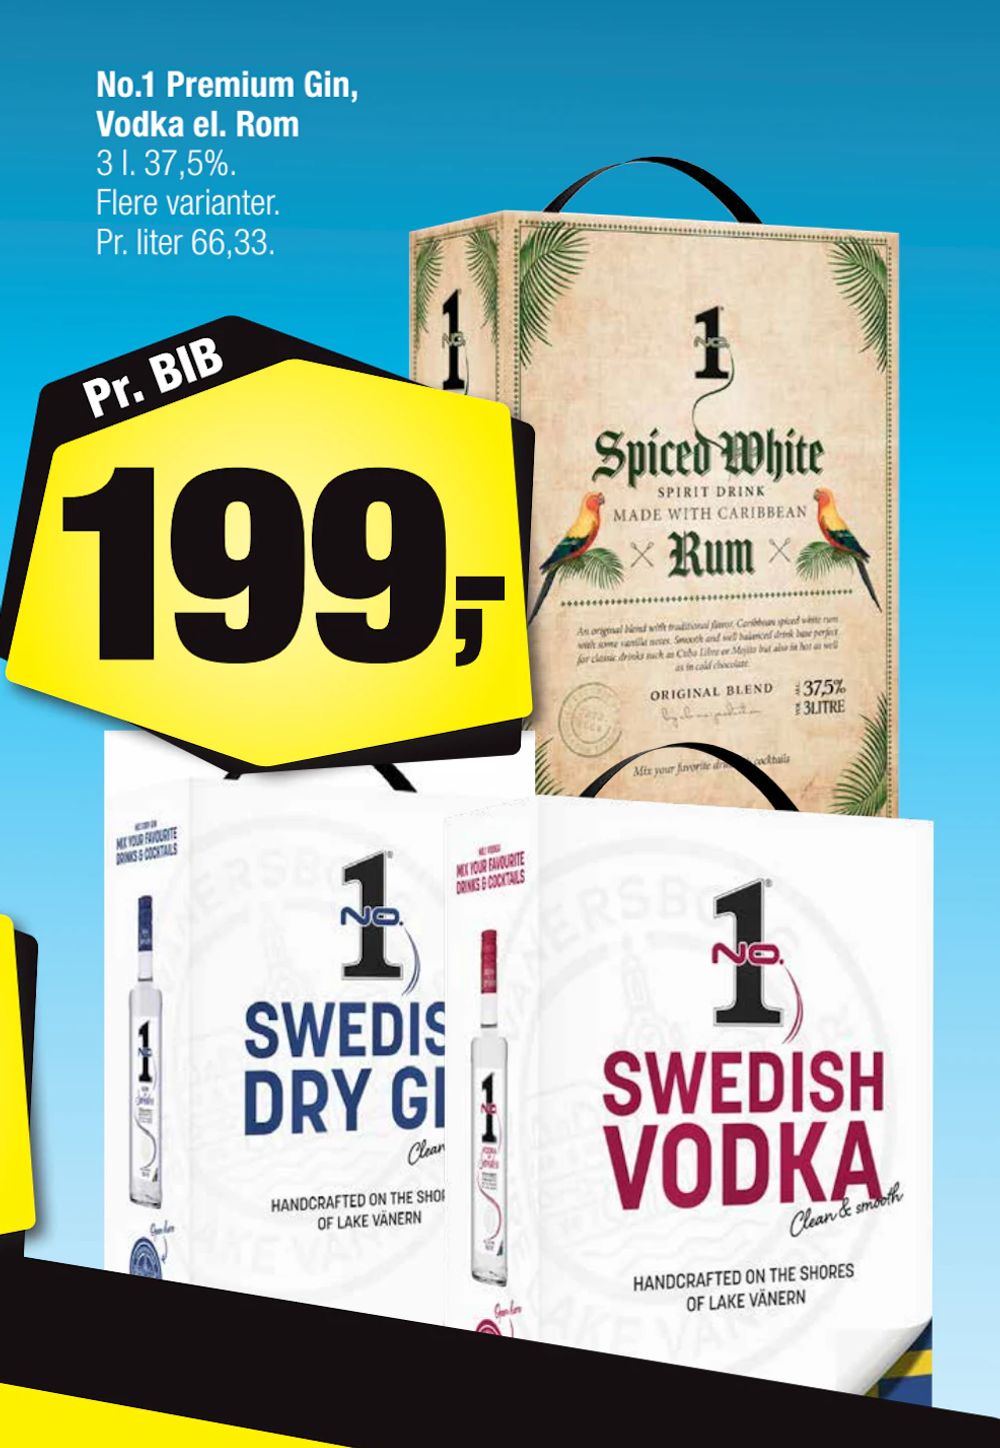 Tilbud på No.1 Premium Gin, Vodka el. Rom fra Calle til 199 kr.